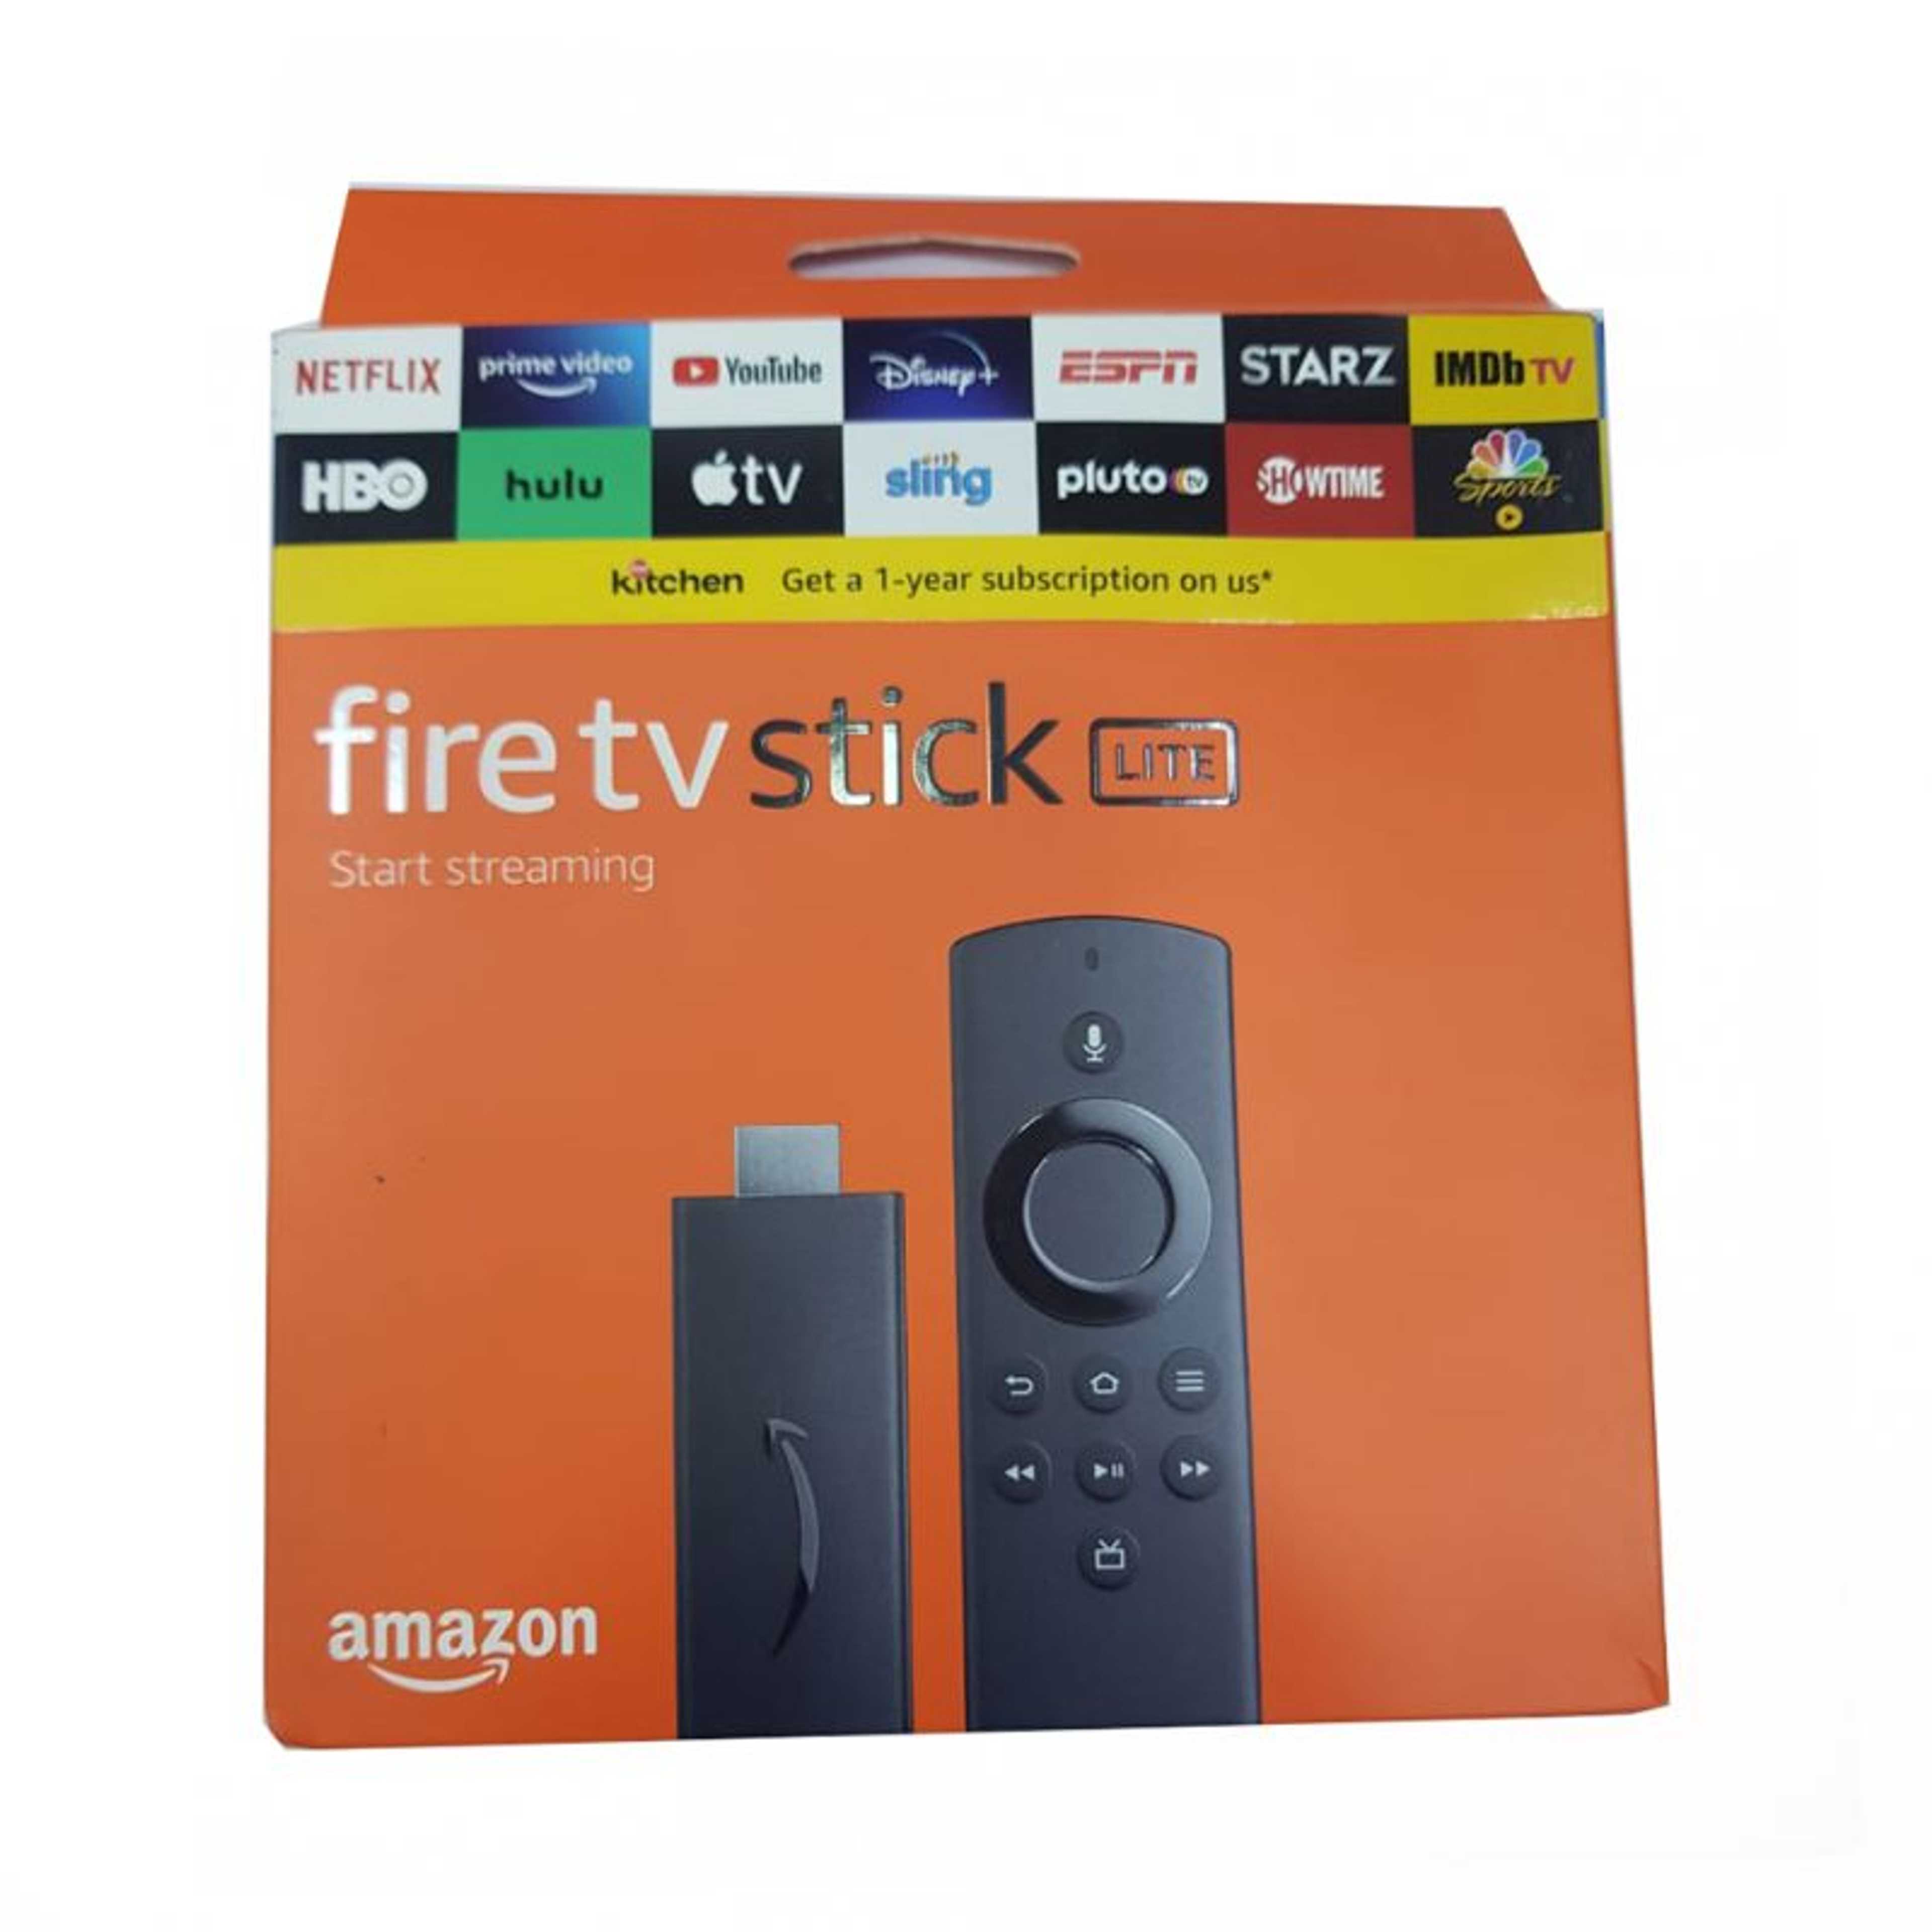 fireTVstick Lite Amazon